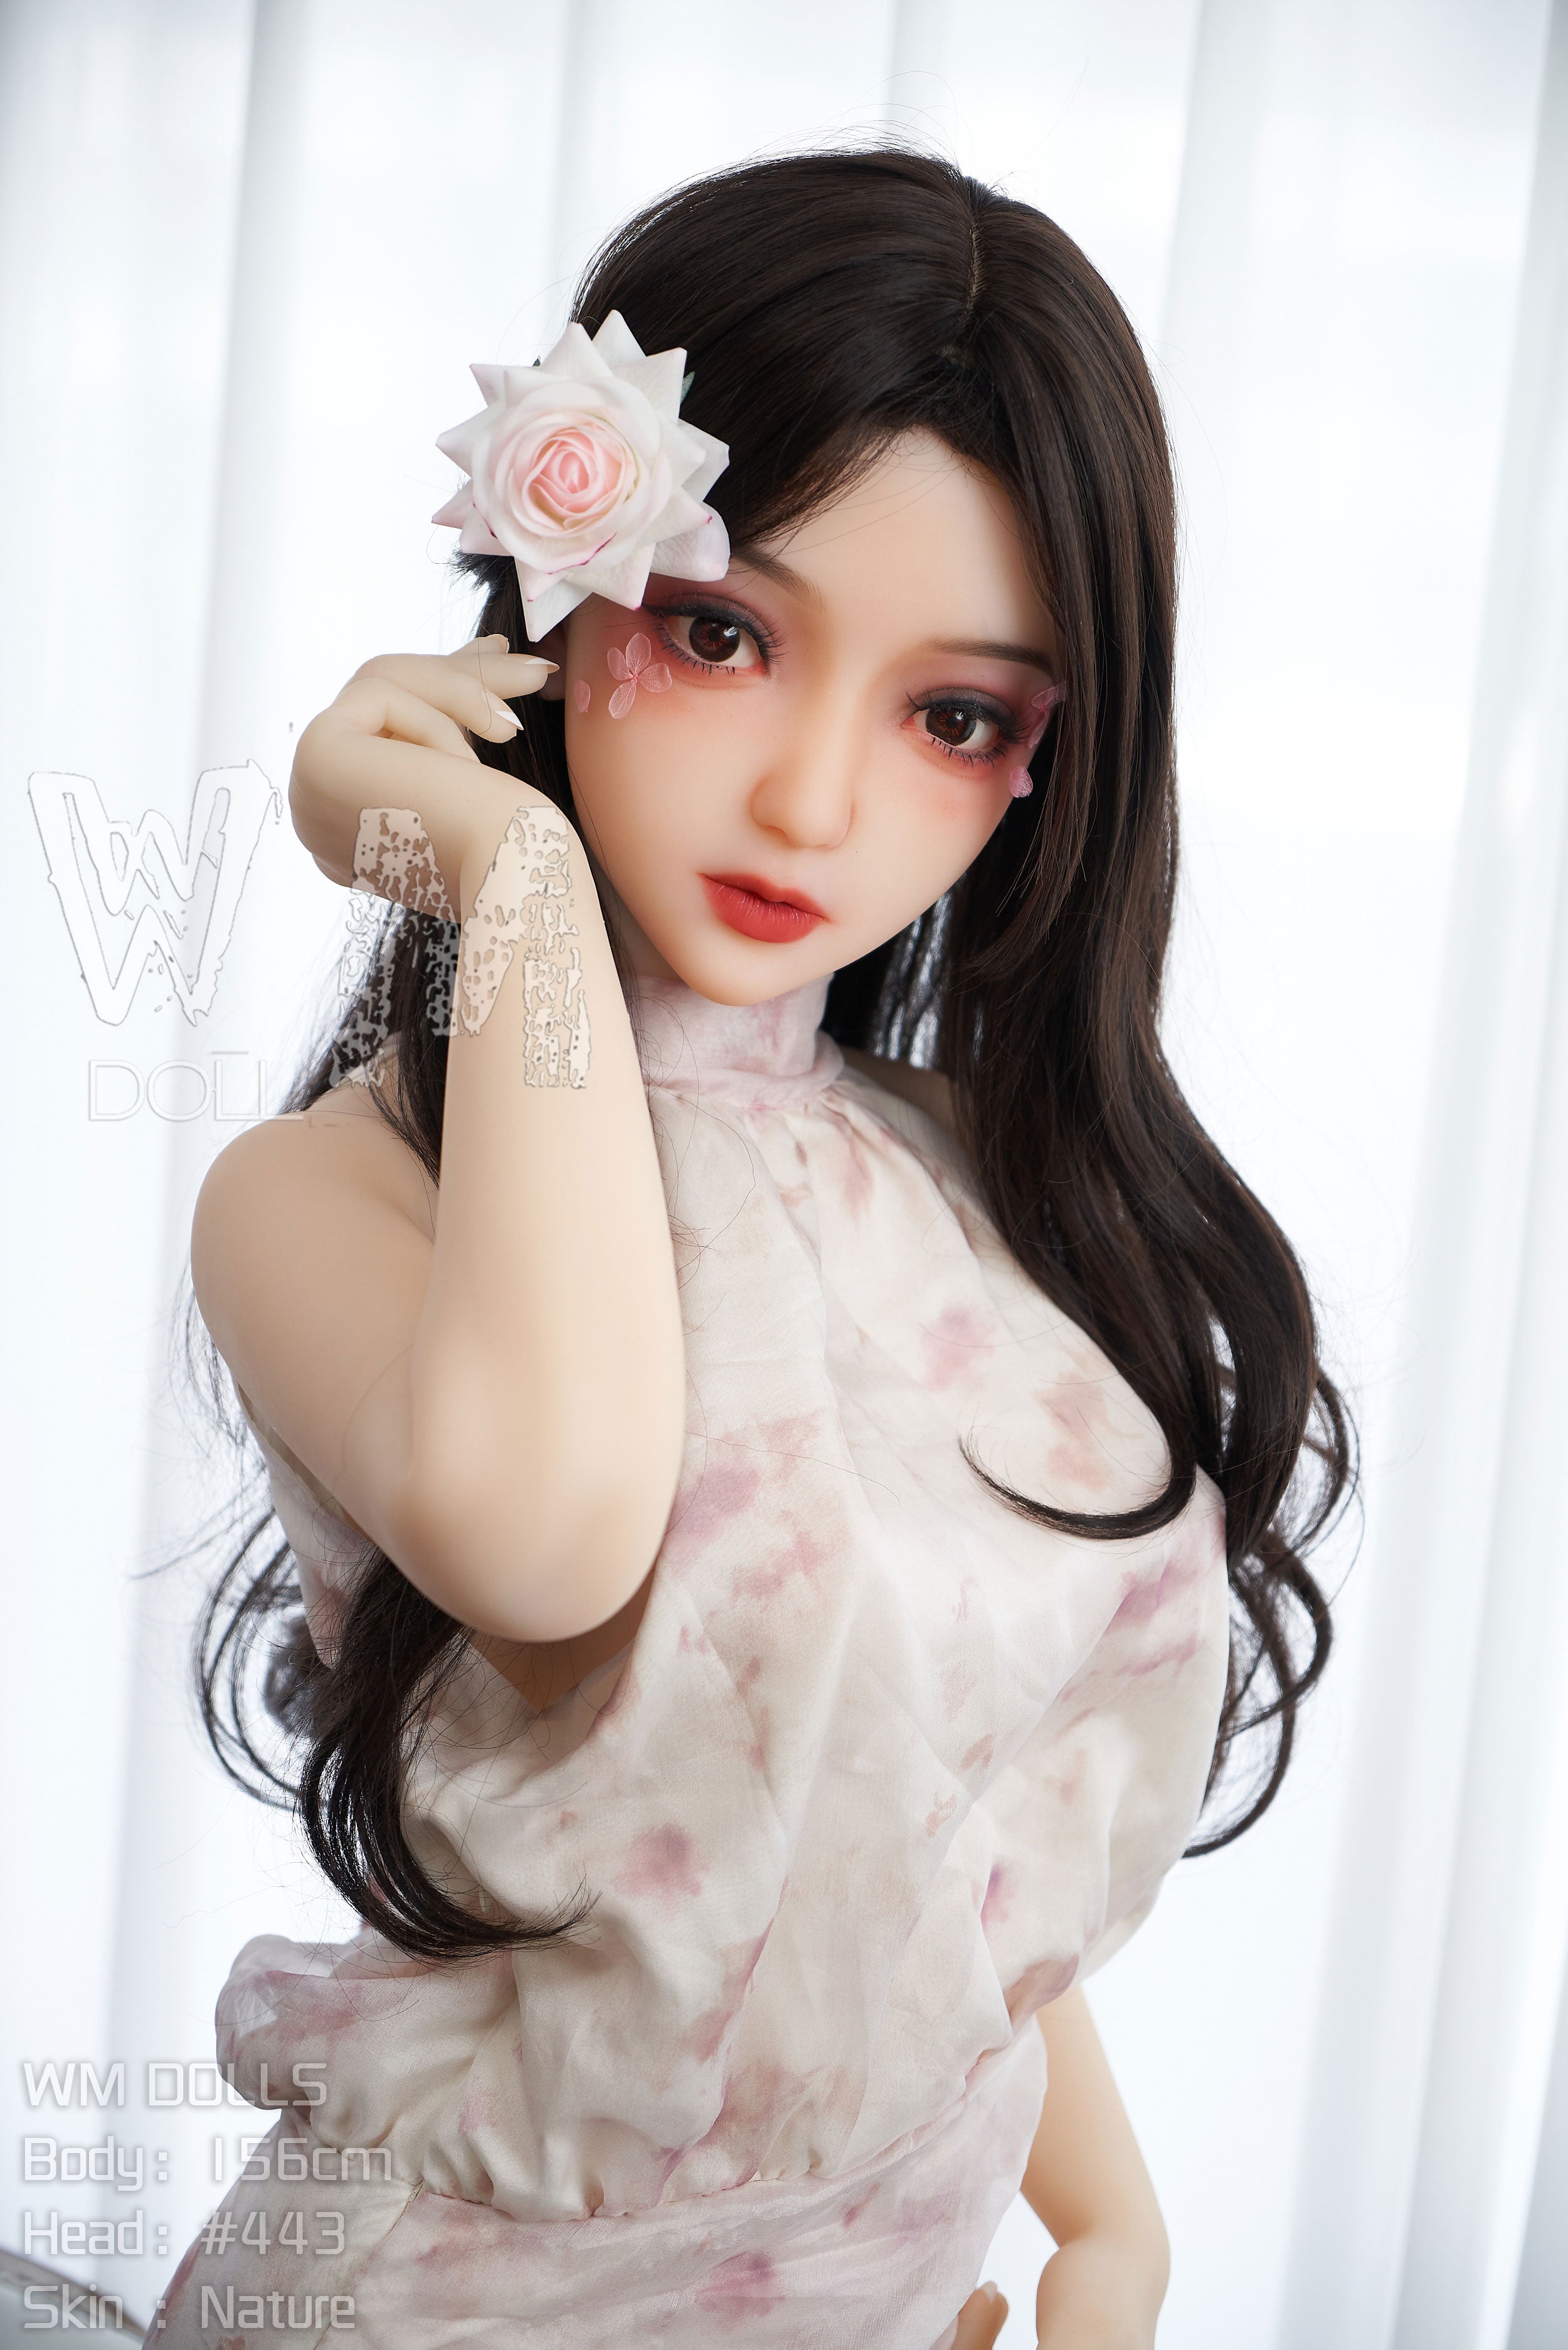 WM DOLL 156 CM B TPE - Isabella | Buy Sex Dolls at DOLLS ACTUALLY